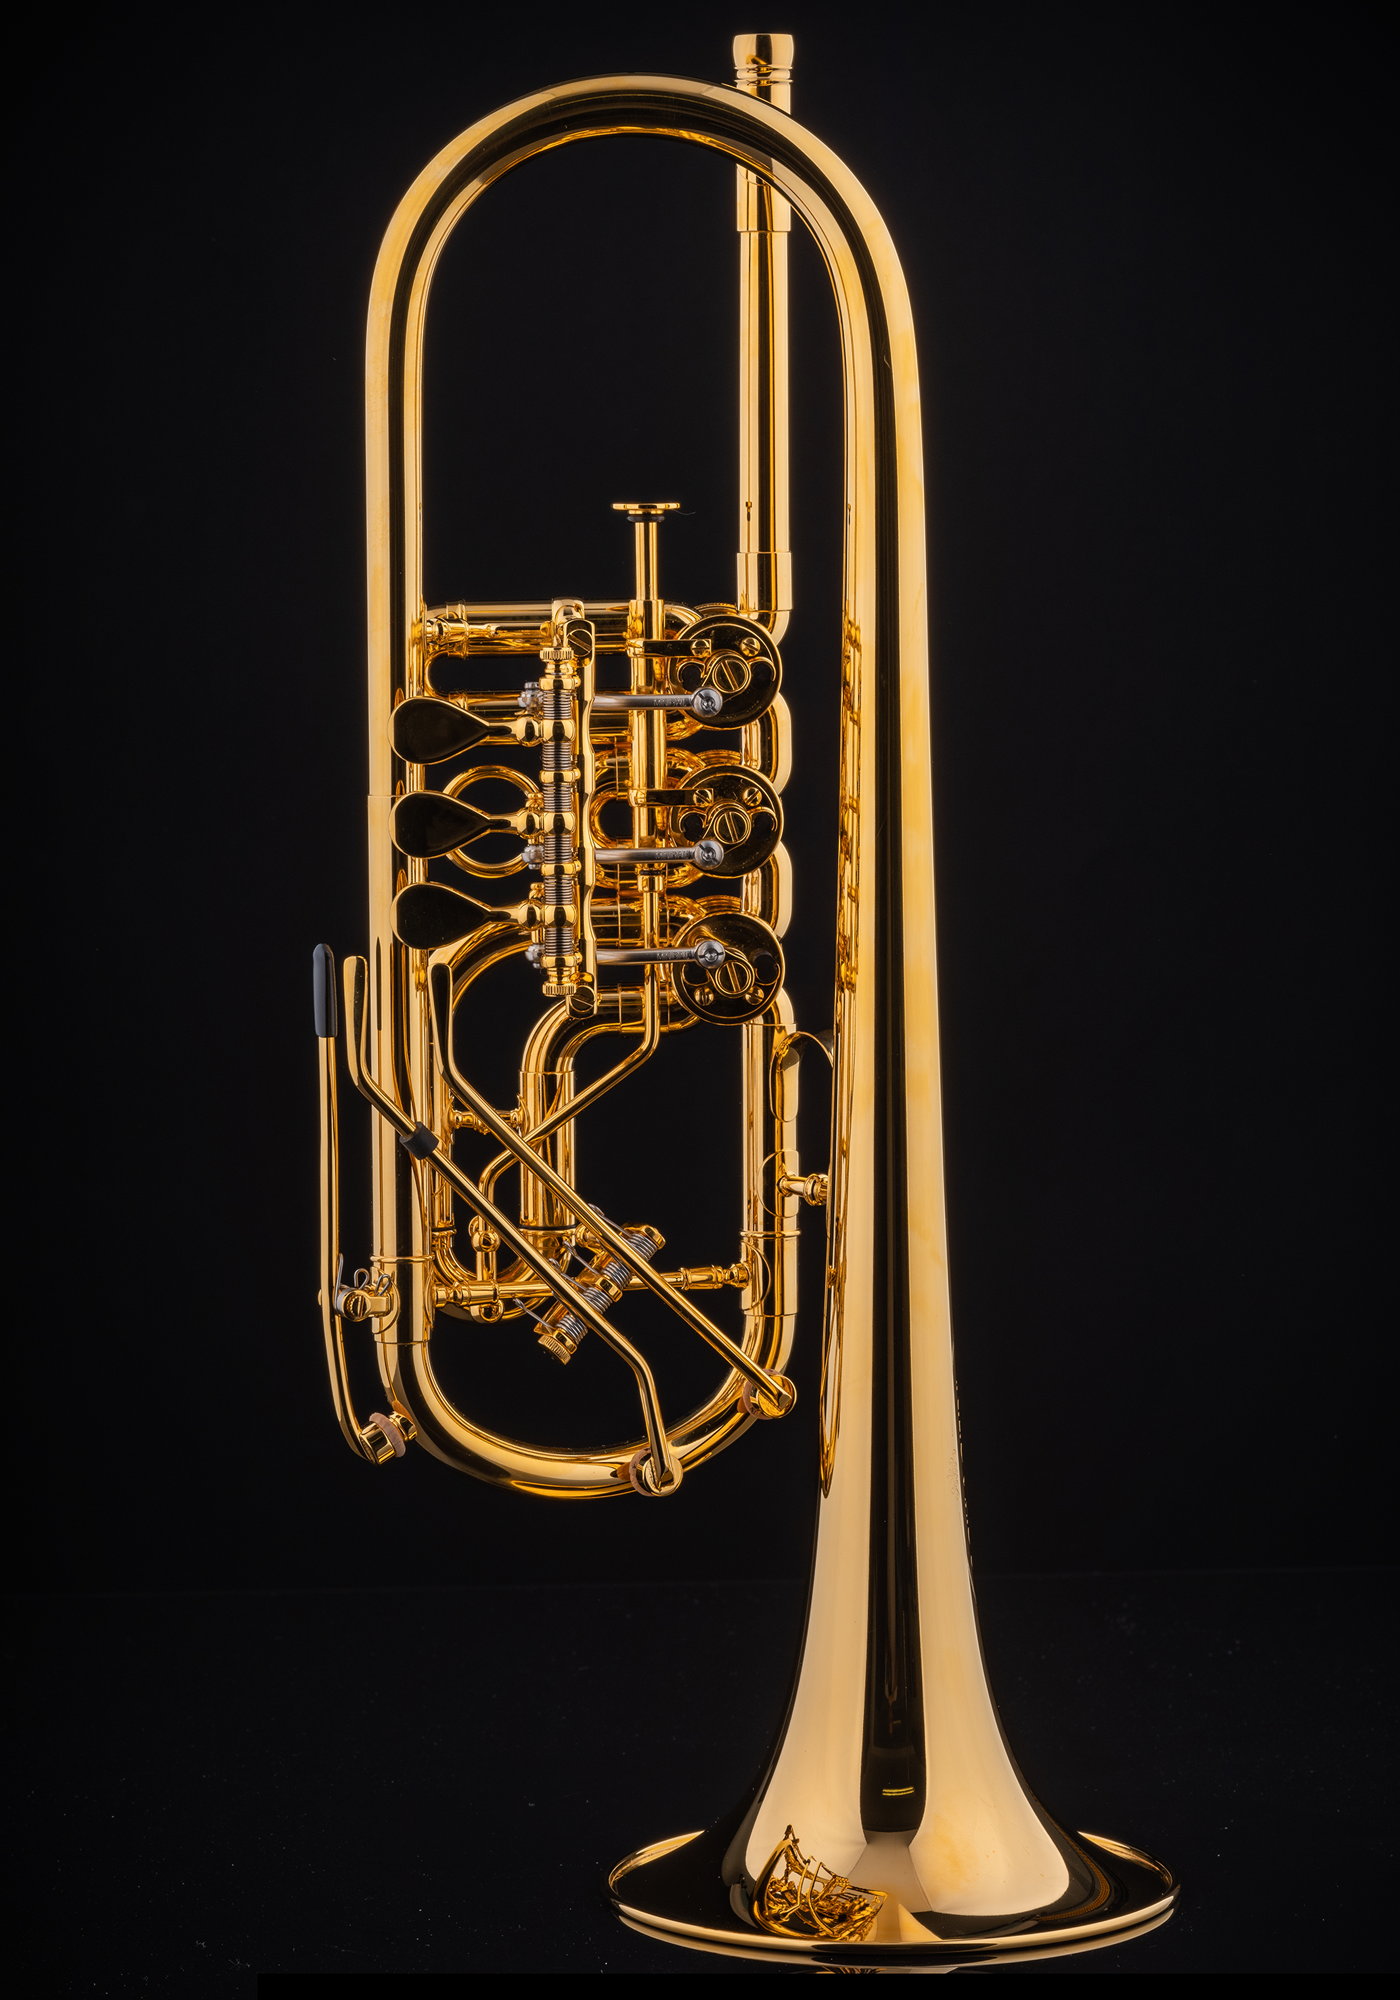 Schagerl C-Trumpet "BERLIN Z" heavy gold plated